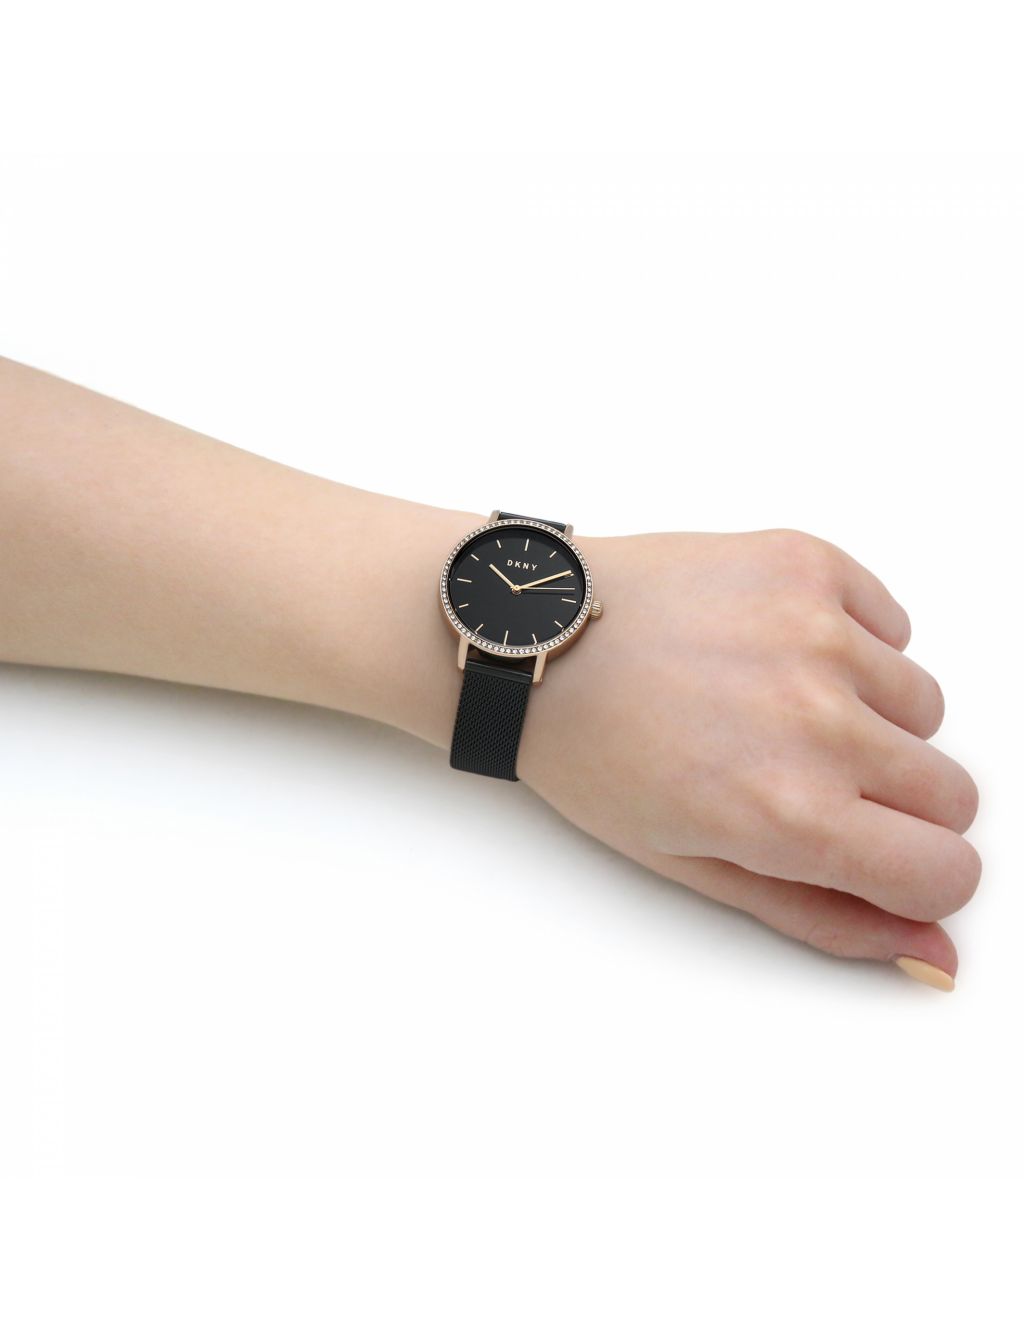 DKNY The Modernist Black Watch image 3